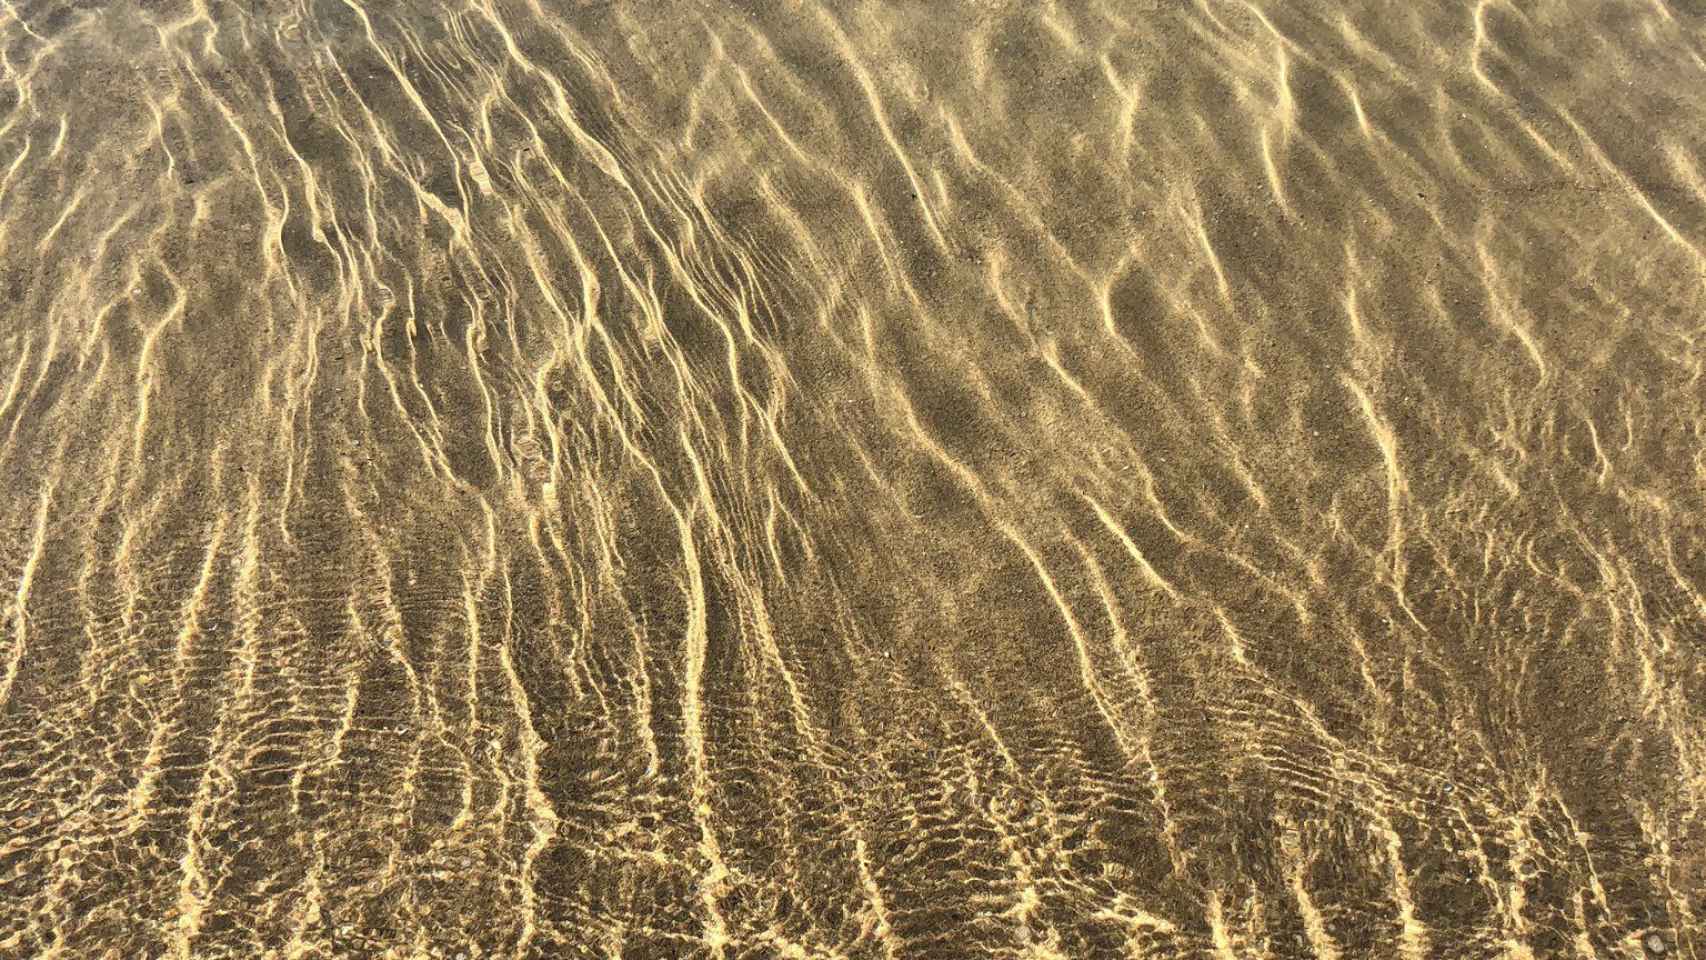 Agua totalmente transparente en la playa de Barcelona / @ingritona40